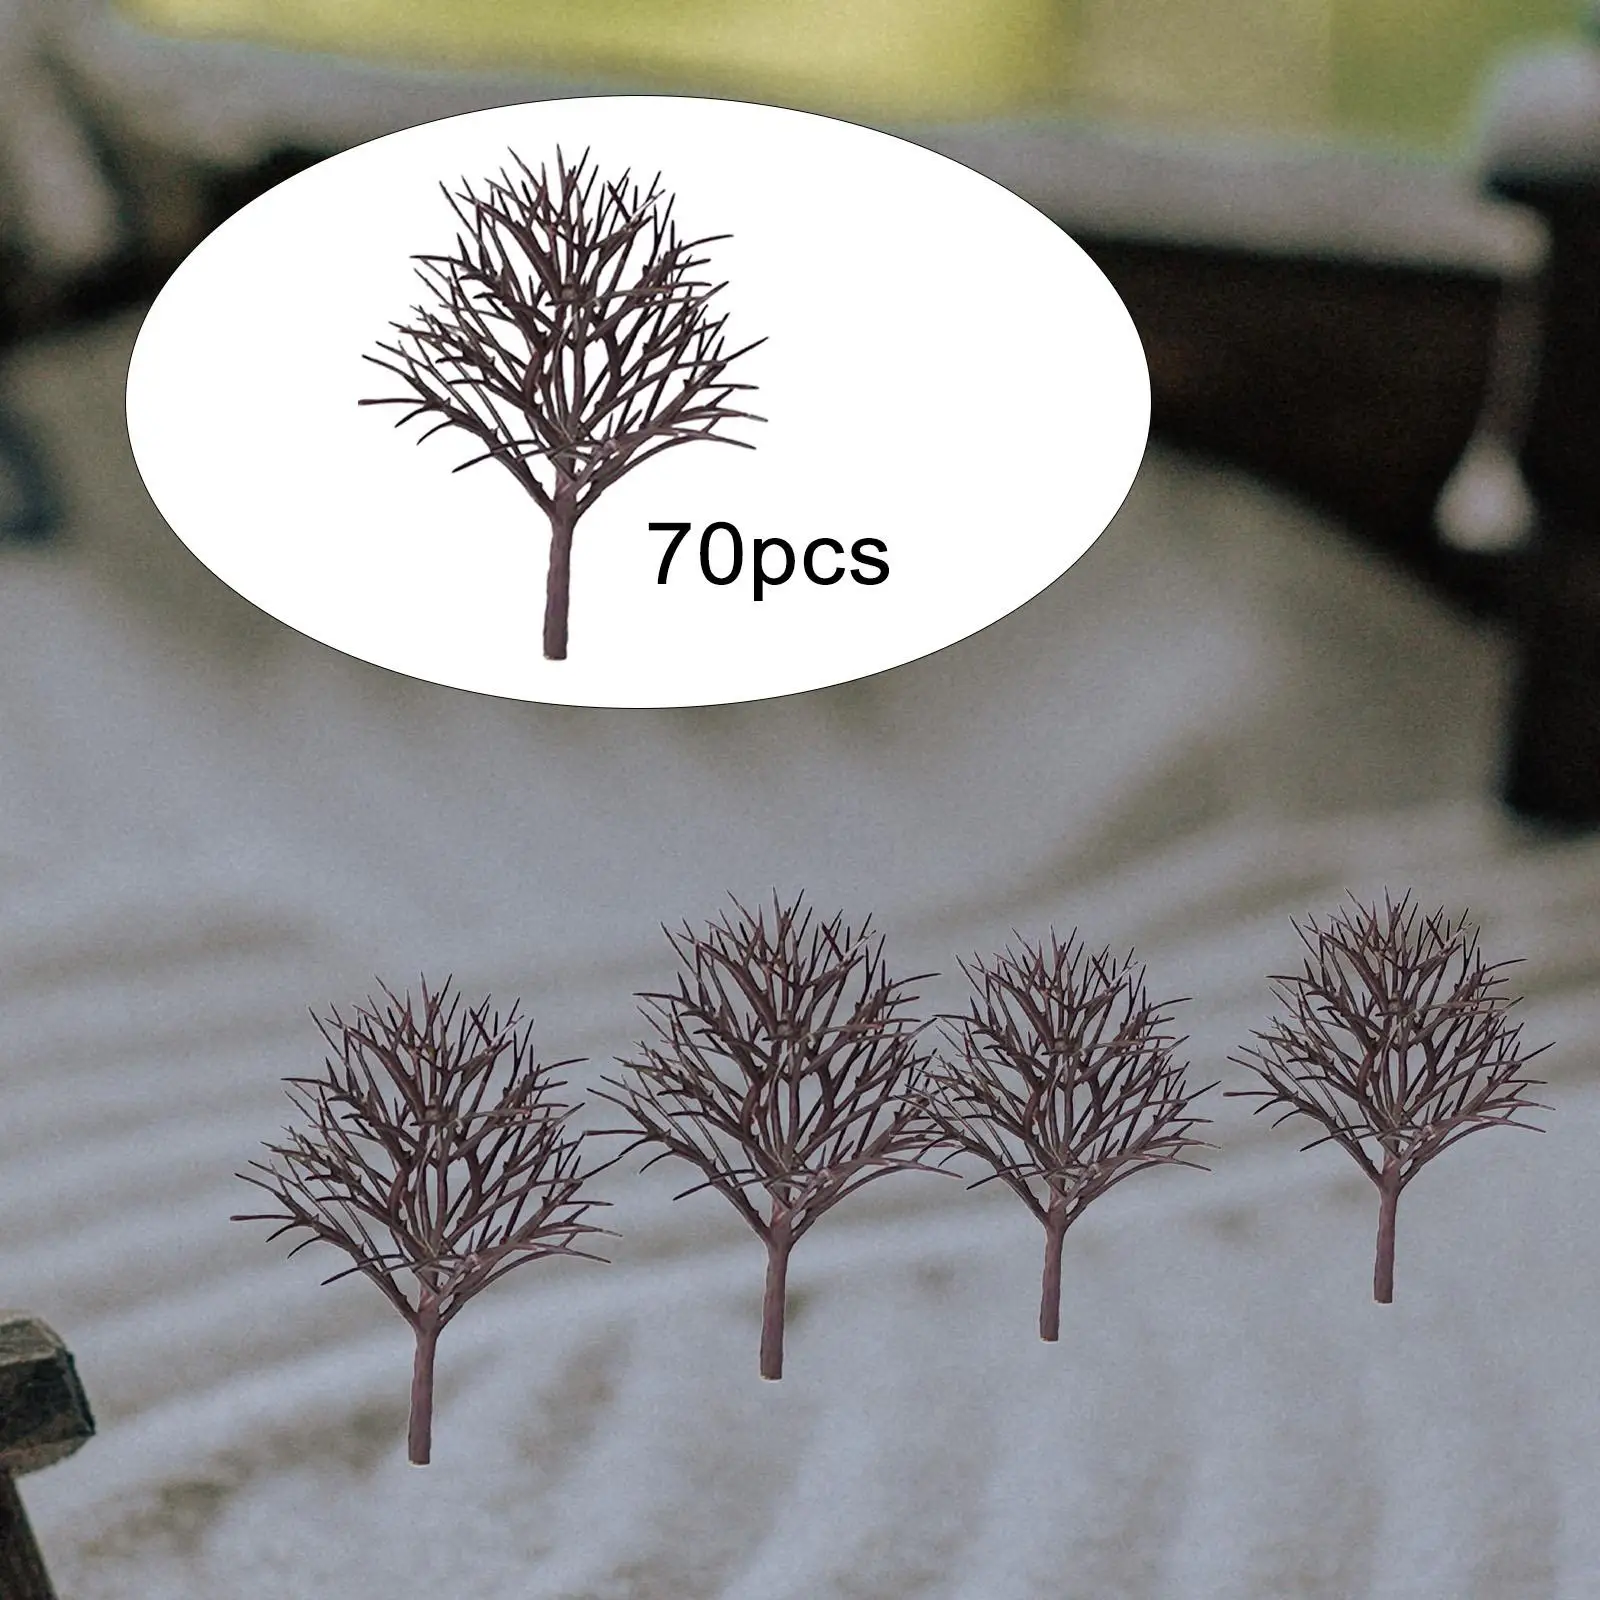 70x Mini Model Trees Diorama Supplies 6cm Scenery Tree Train Scenery Architecture Trees for DIY Crafts Garden Landscape Scenery